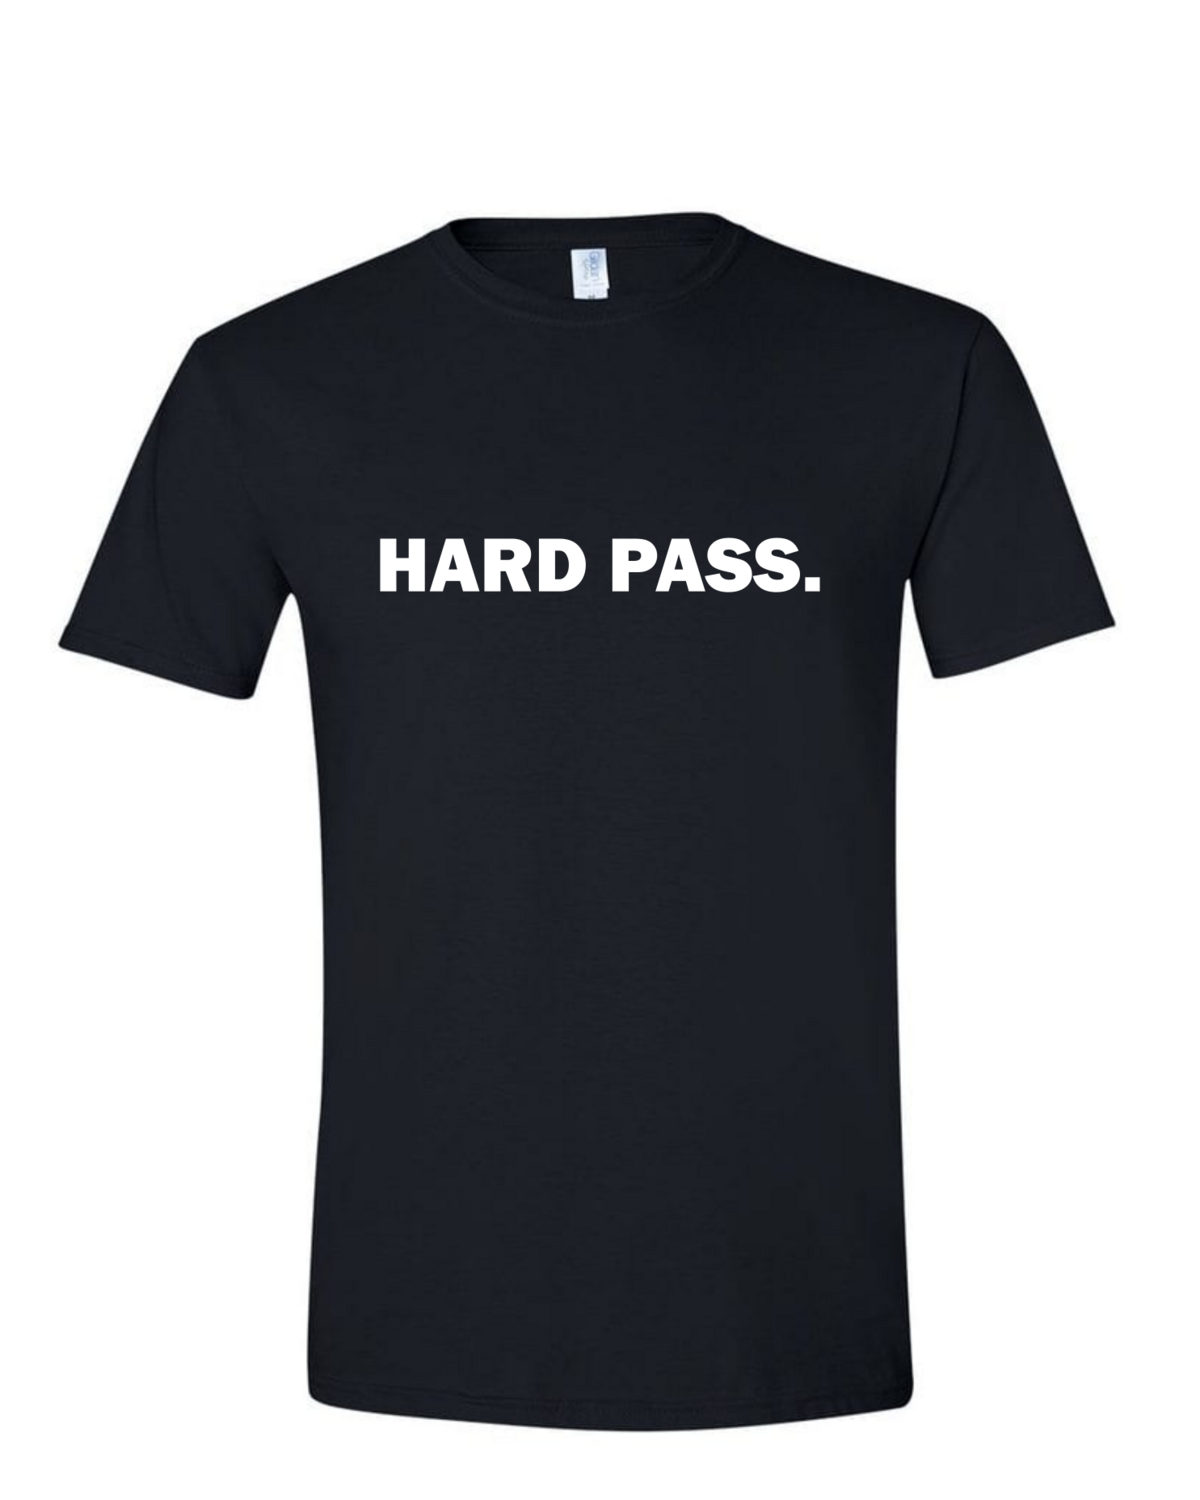 Hard Pass - (Mens/Ladies Shirt)